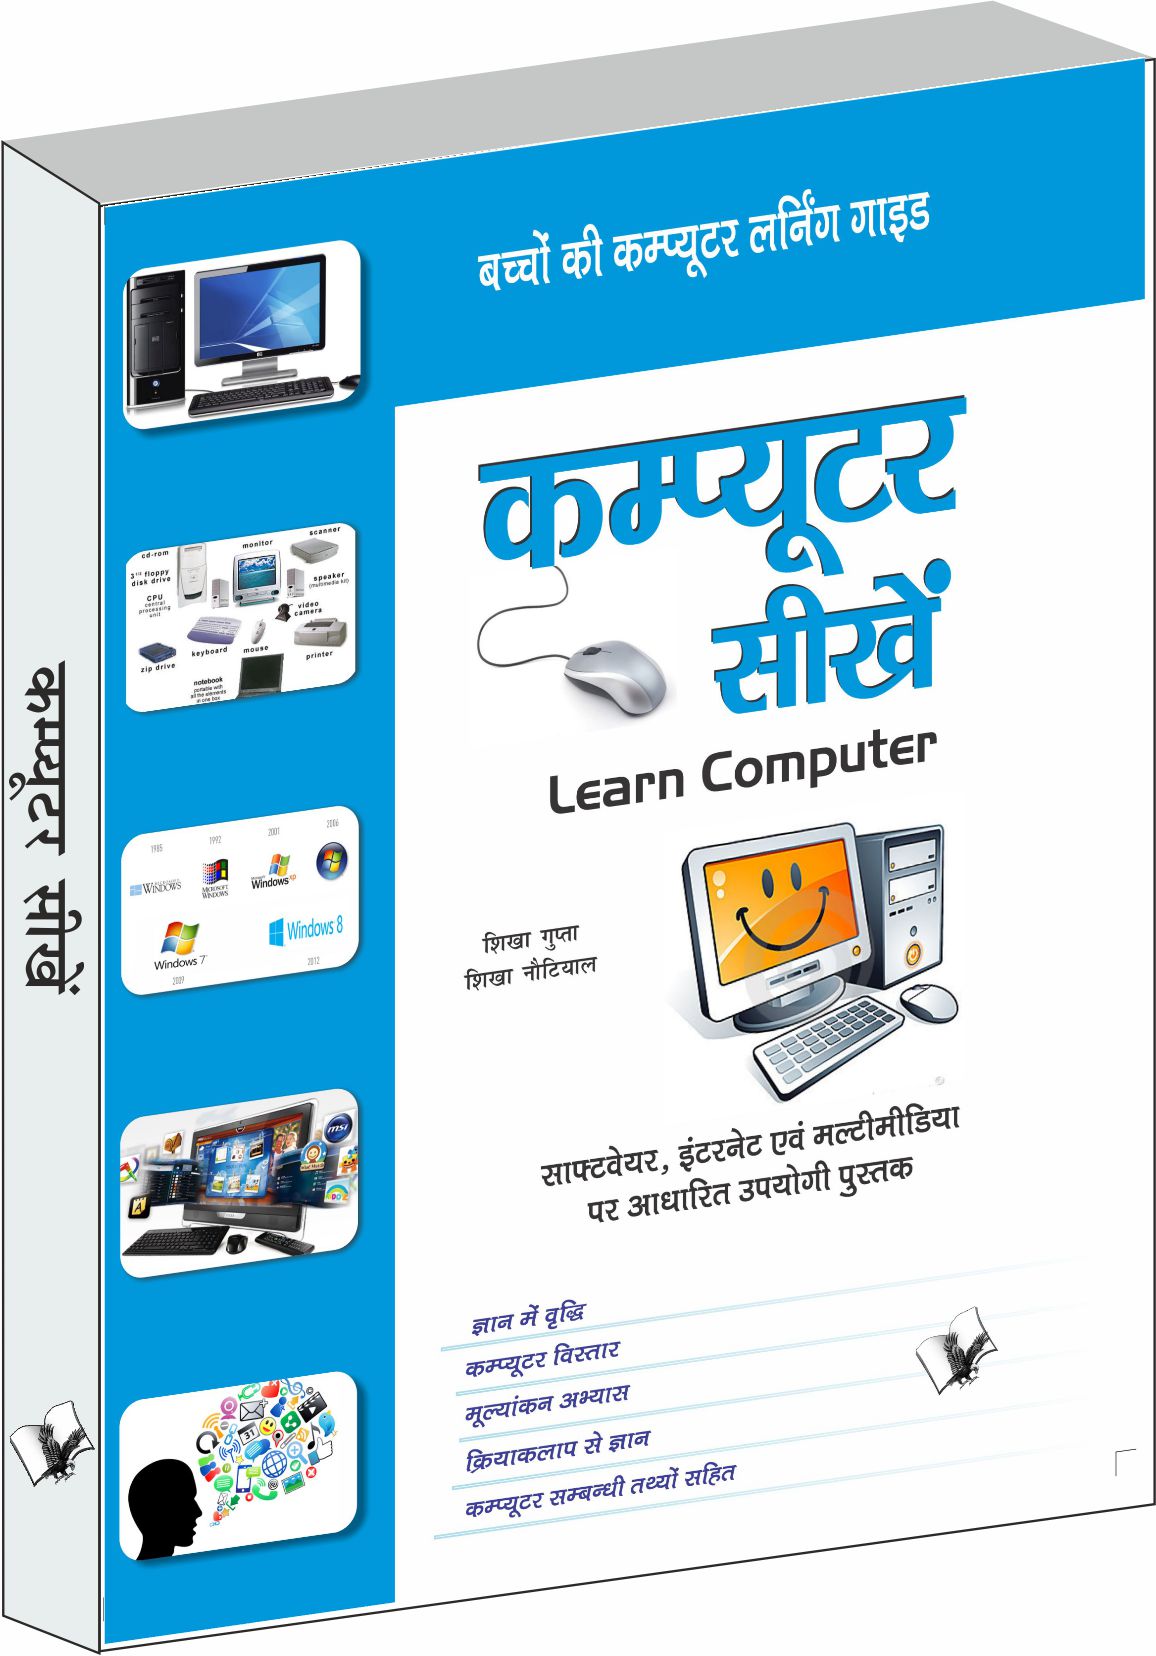 Computer Sikhein- Software, Internet Evam Mulitmedia Par Adharit Upyogi Pustak